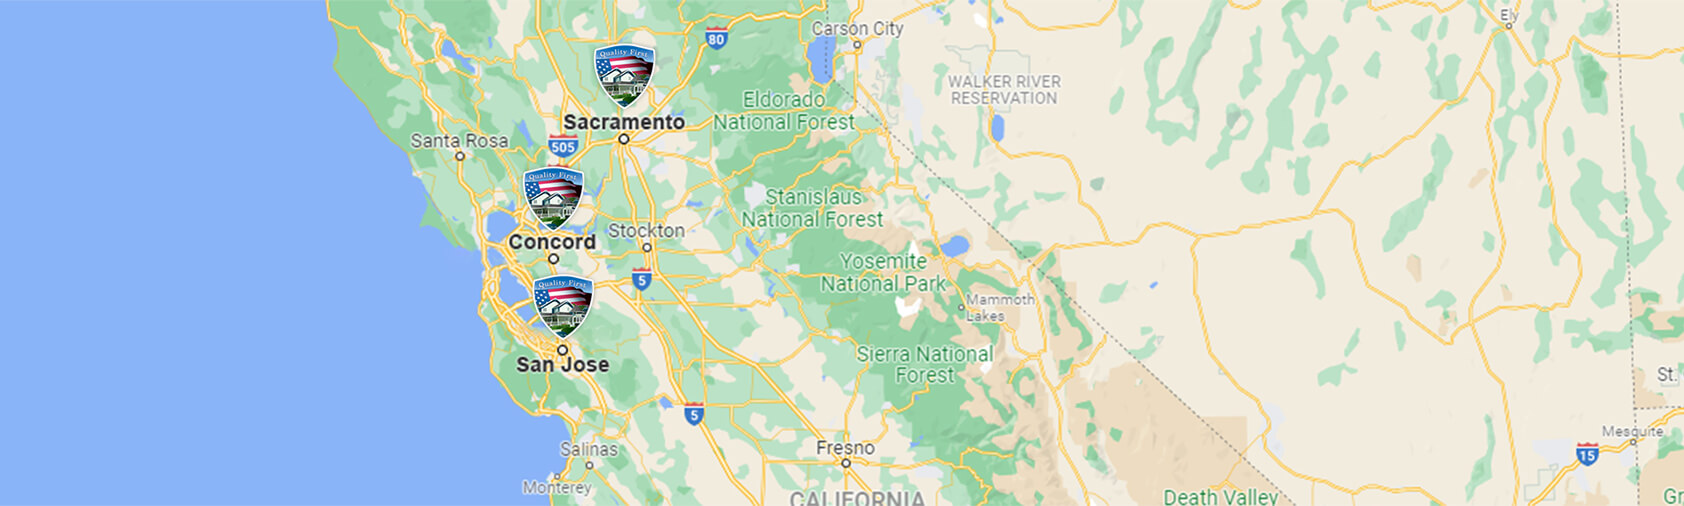 california map updated